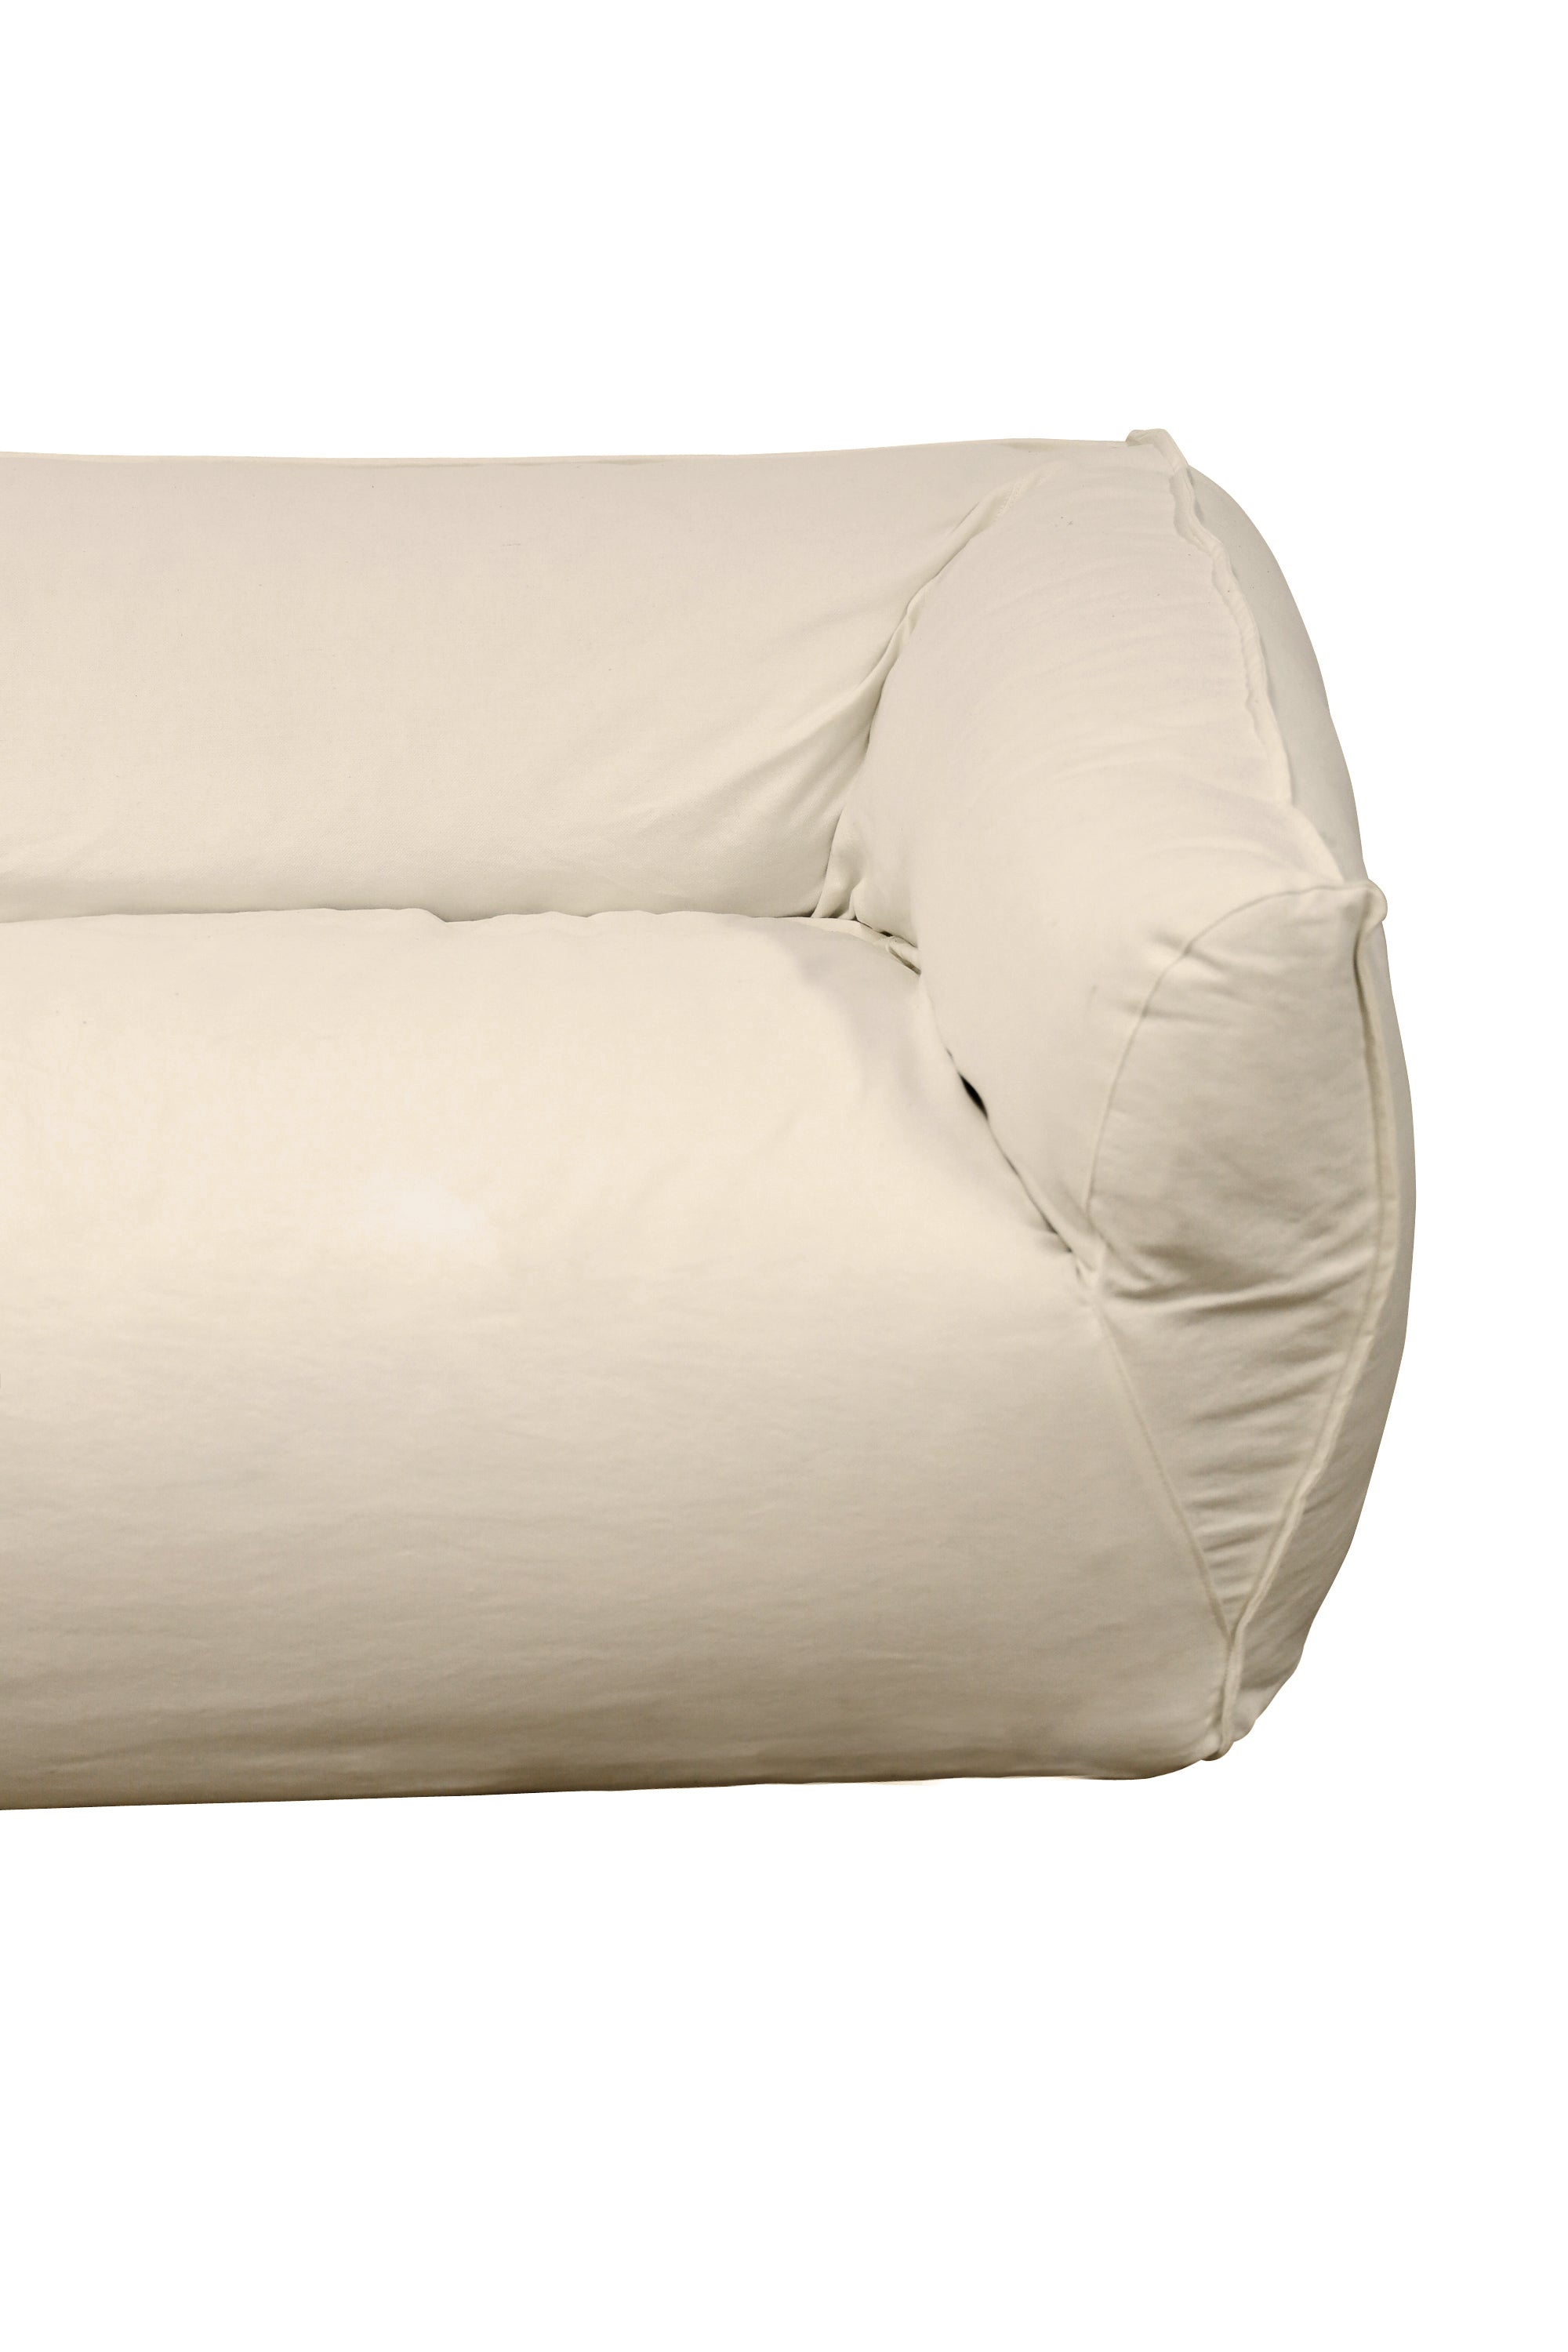 Aria Linen 3 seater Sofa - Oatmeal